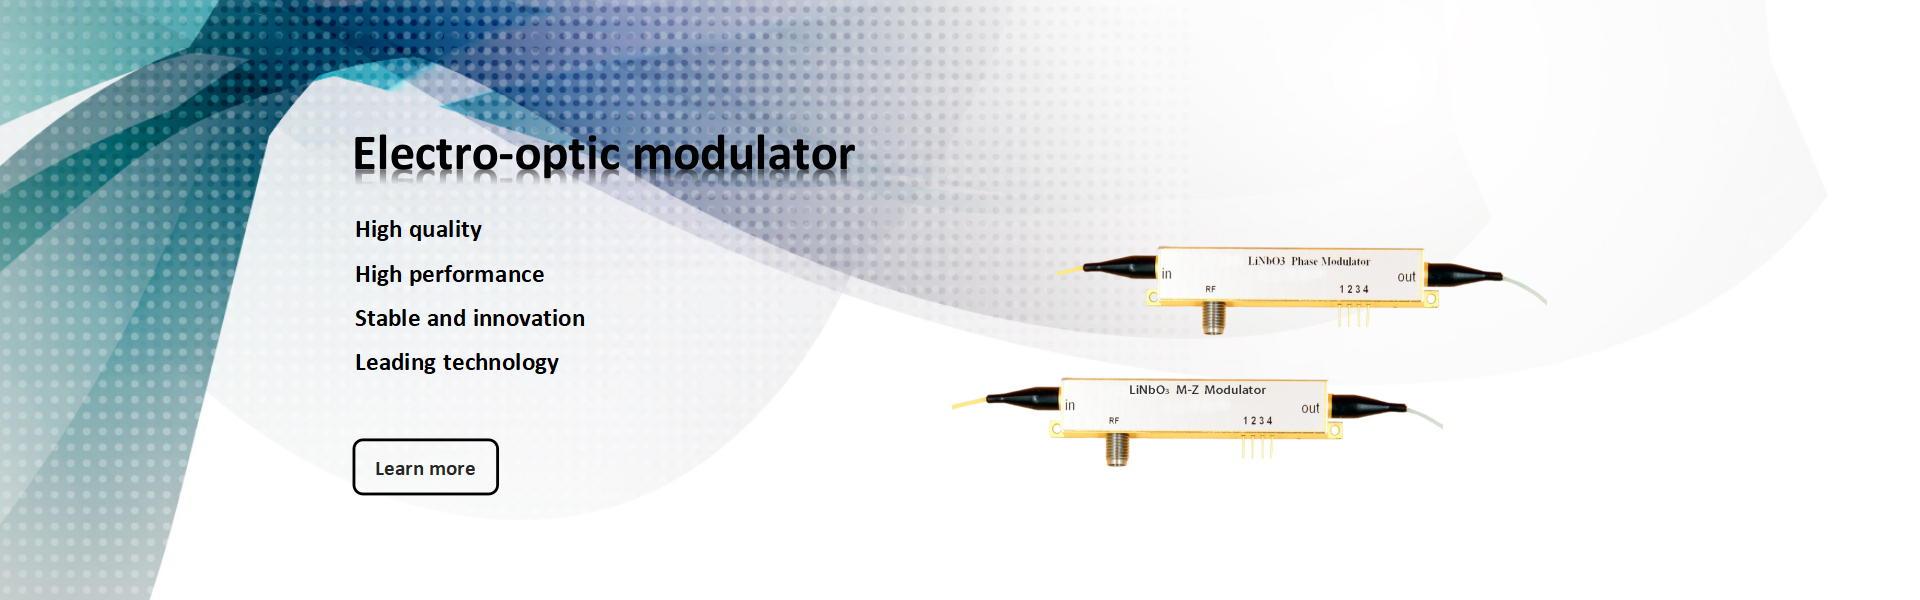 electro-optic modulator Mach-Zehnder Modulator LiNbO3 modulator intensity modulator